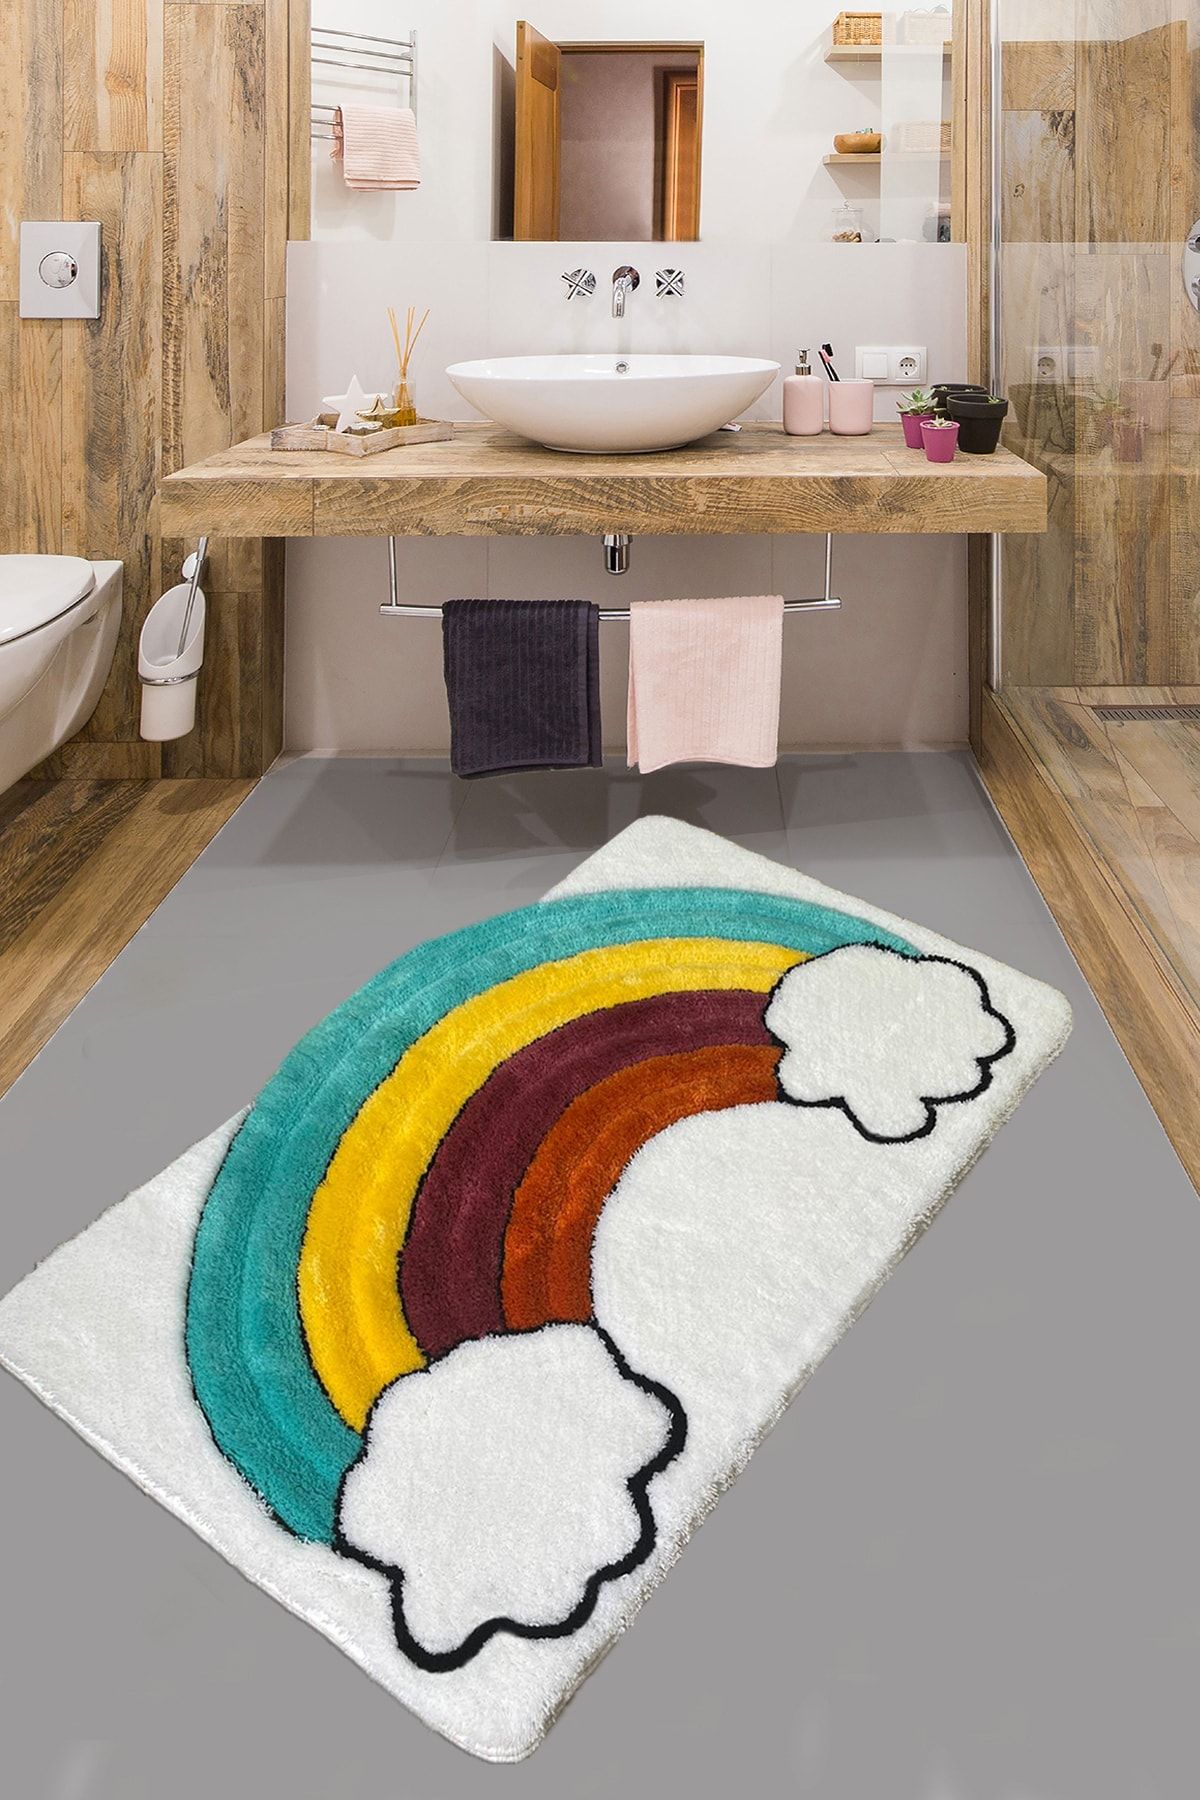 Chilai Home Noros Renkli 70x125 cm Banyo Halısı Paspas Kaymaz Taban Yıkanabilir